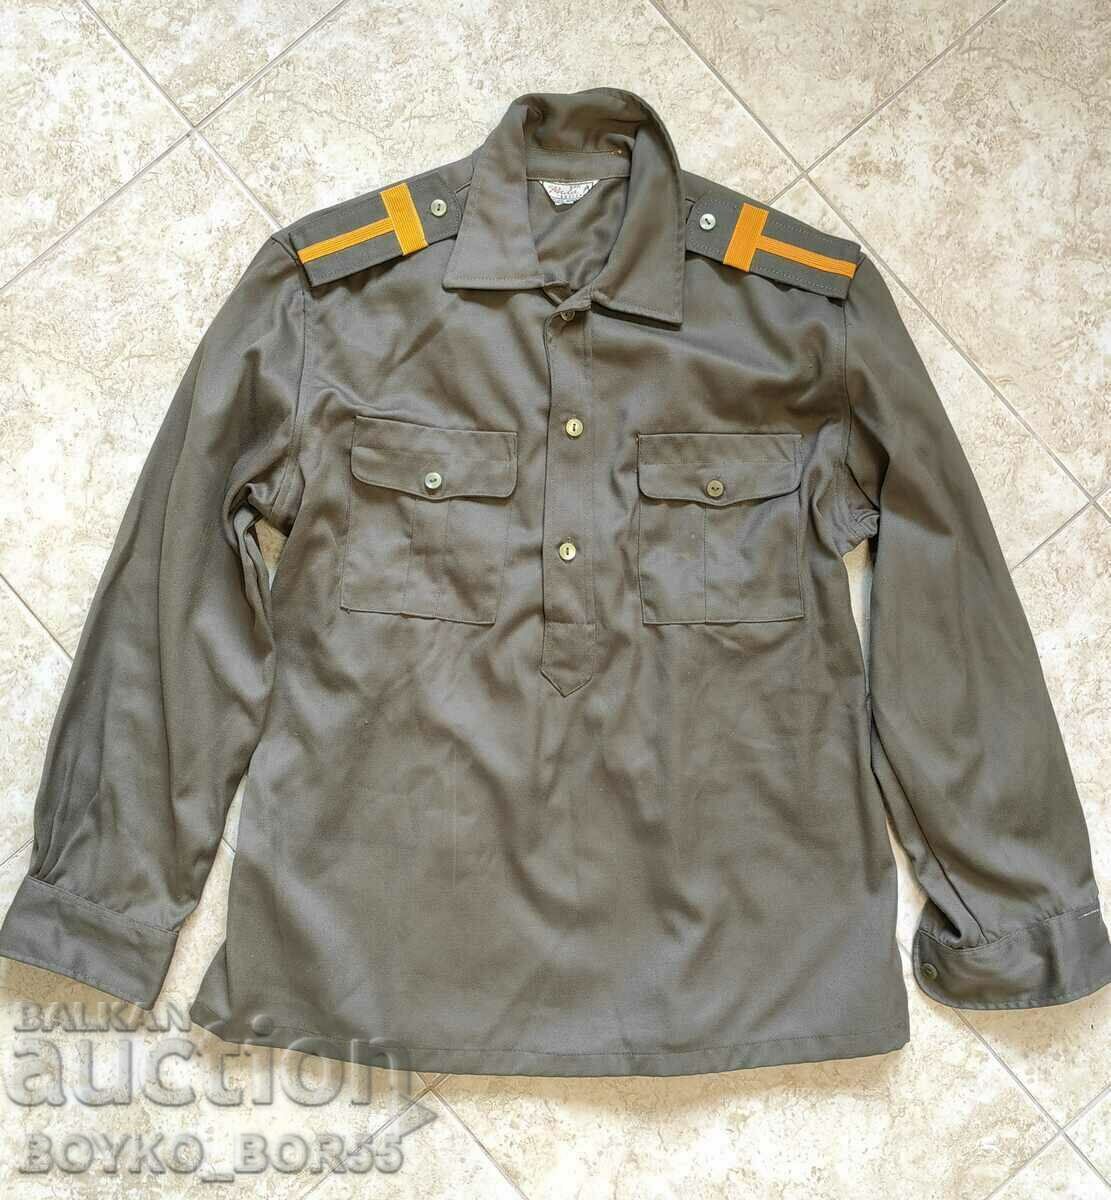 Bulgarian Military Social Summer Shirt Sergeant Nova's Jacket